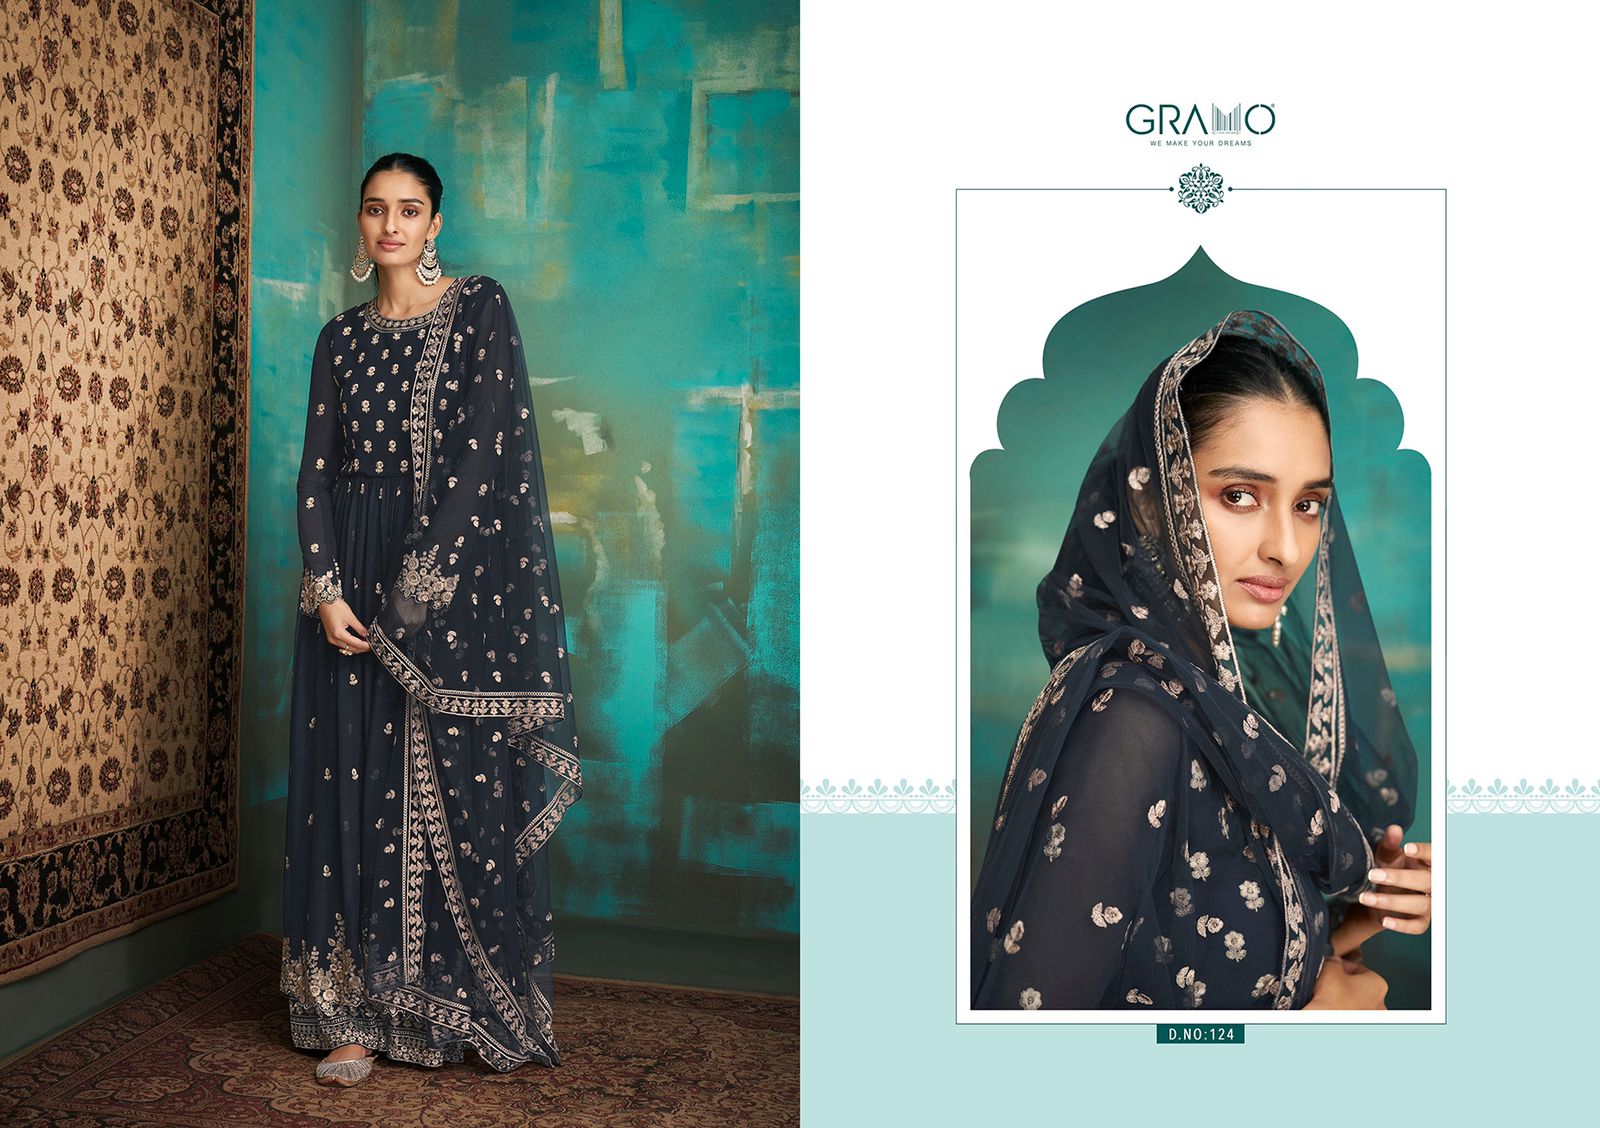 Gramo Navabi  Vol 1 Georgette Wear Designer Salwar Kameez Catalog